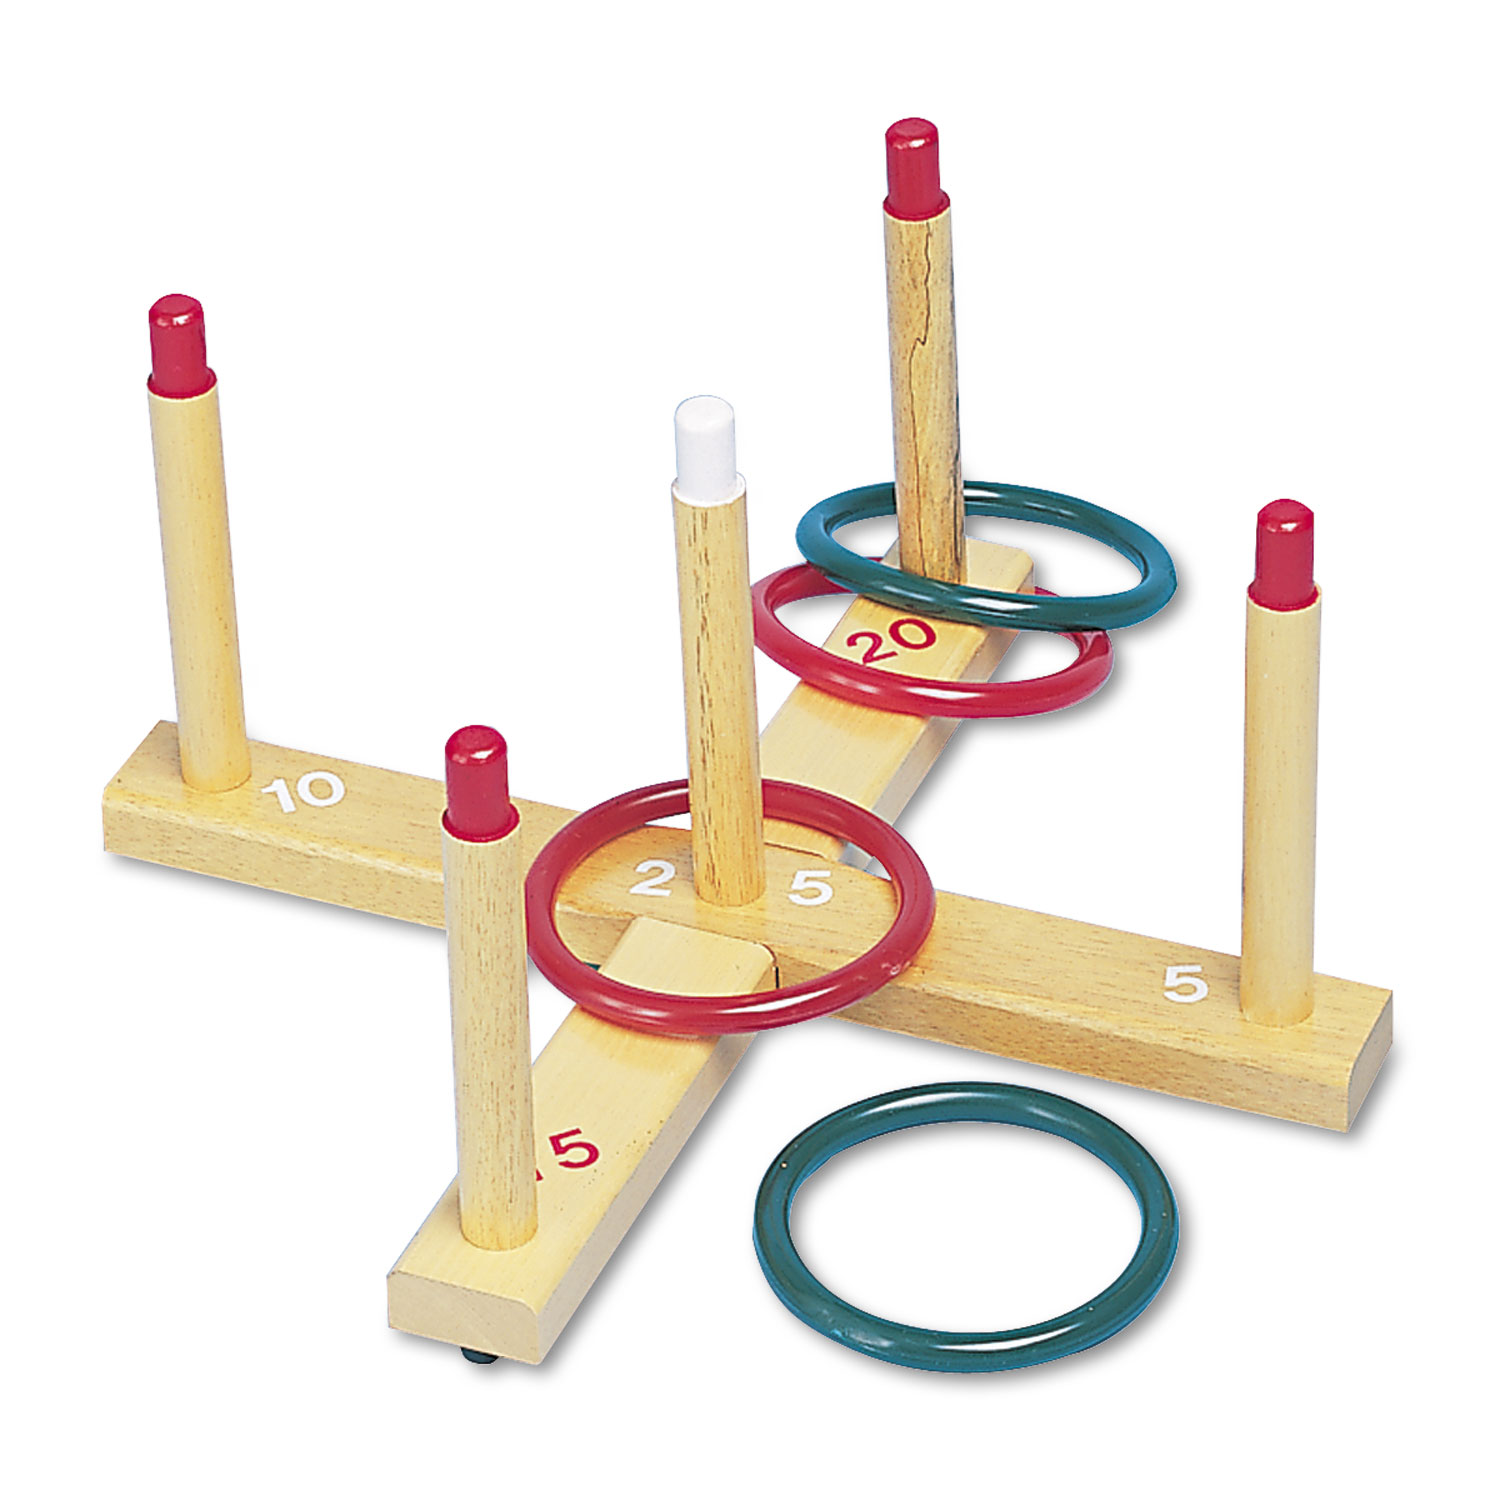  Champion Sports QS1 Ring Toss Set, Plastic/Wood, Assorted Colors, 4 Rings/5 Pegs/Set (CSIQS1) 